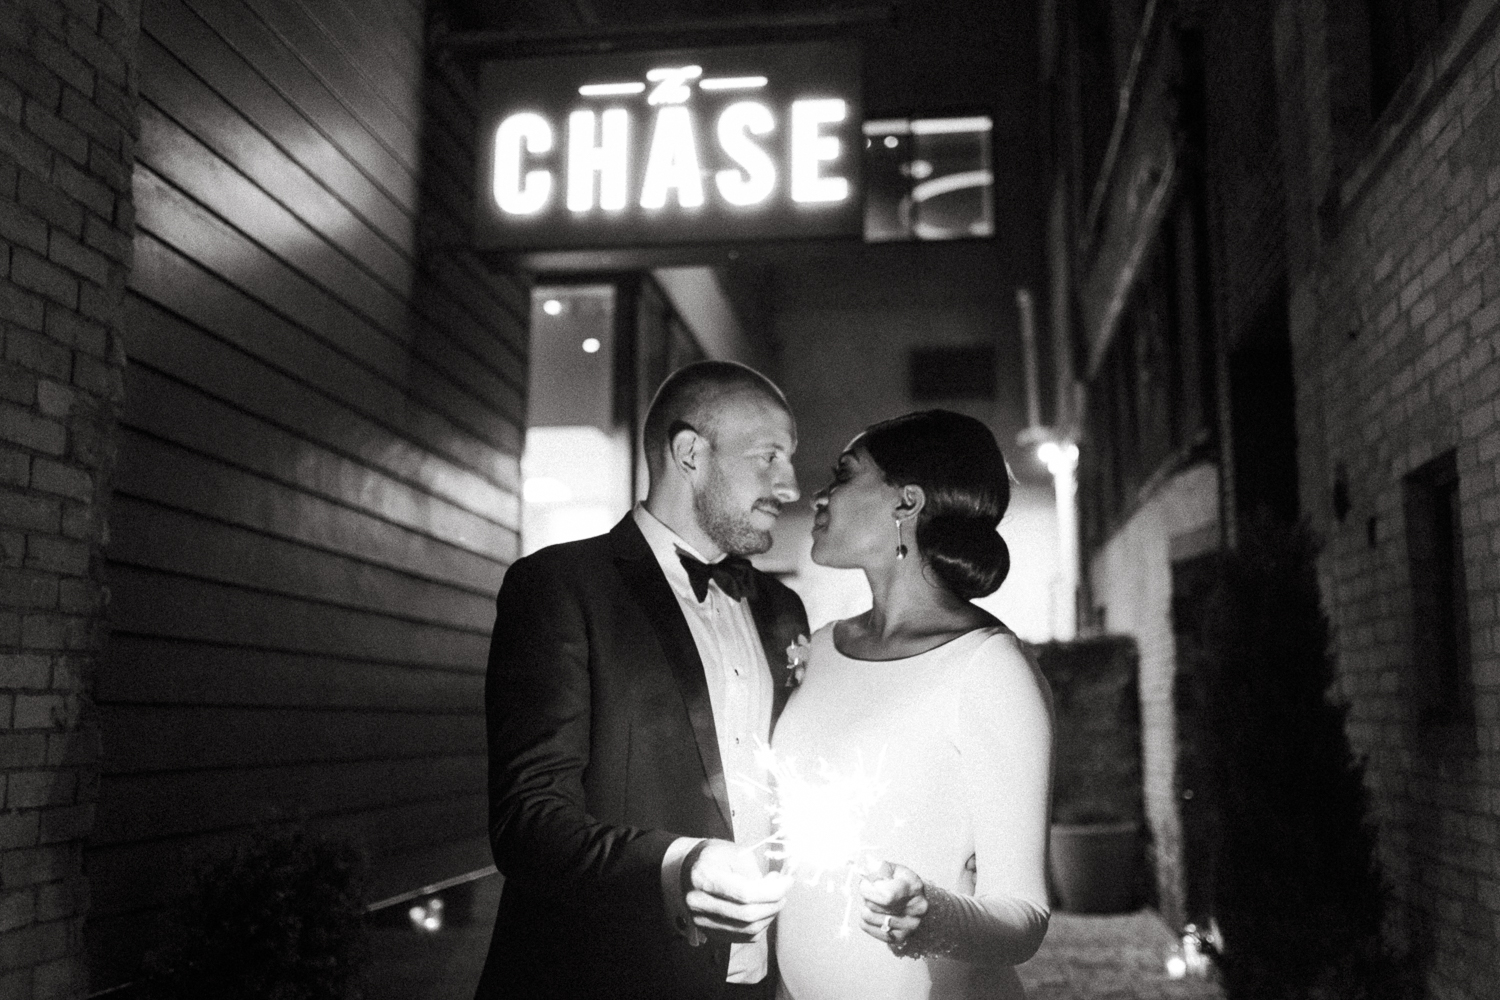 146-157-The-Chase-Wedding-Photos-Real-Wedding-Toronto-Film-Photographer-217.JPG